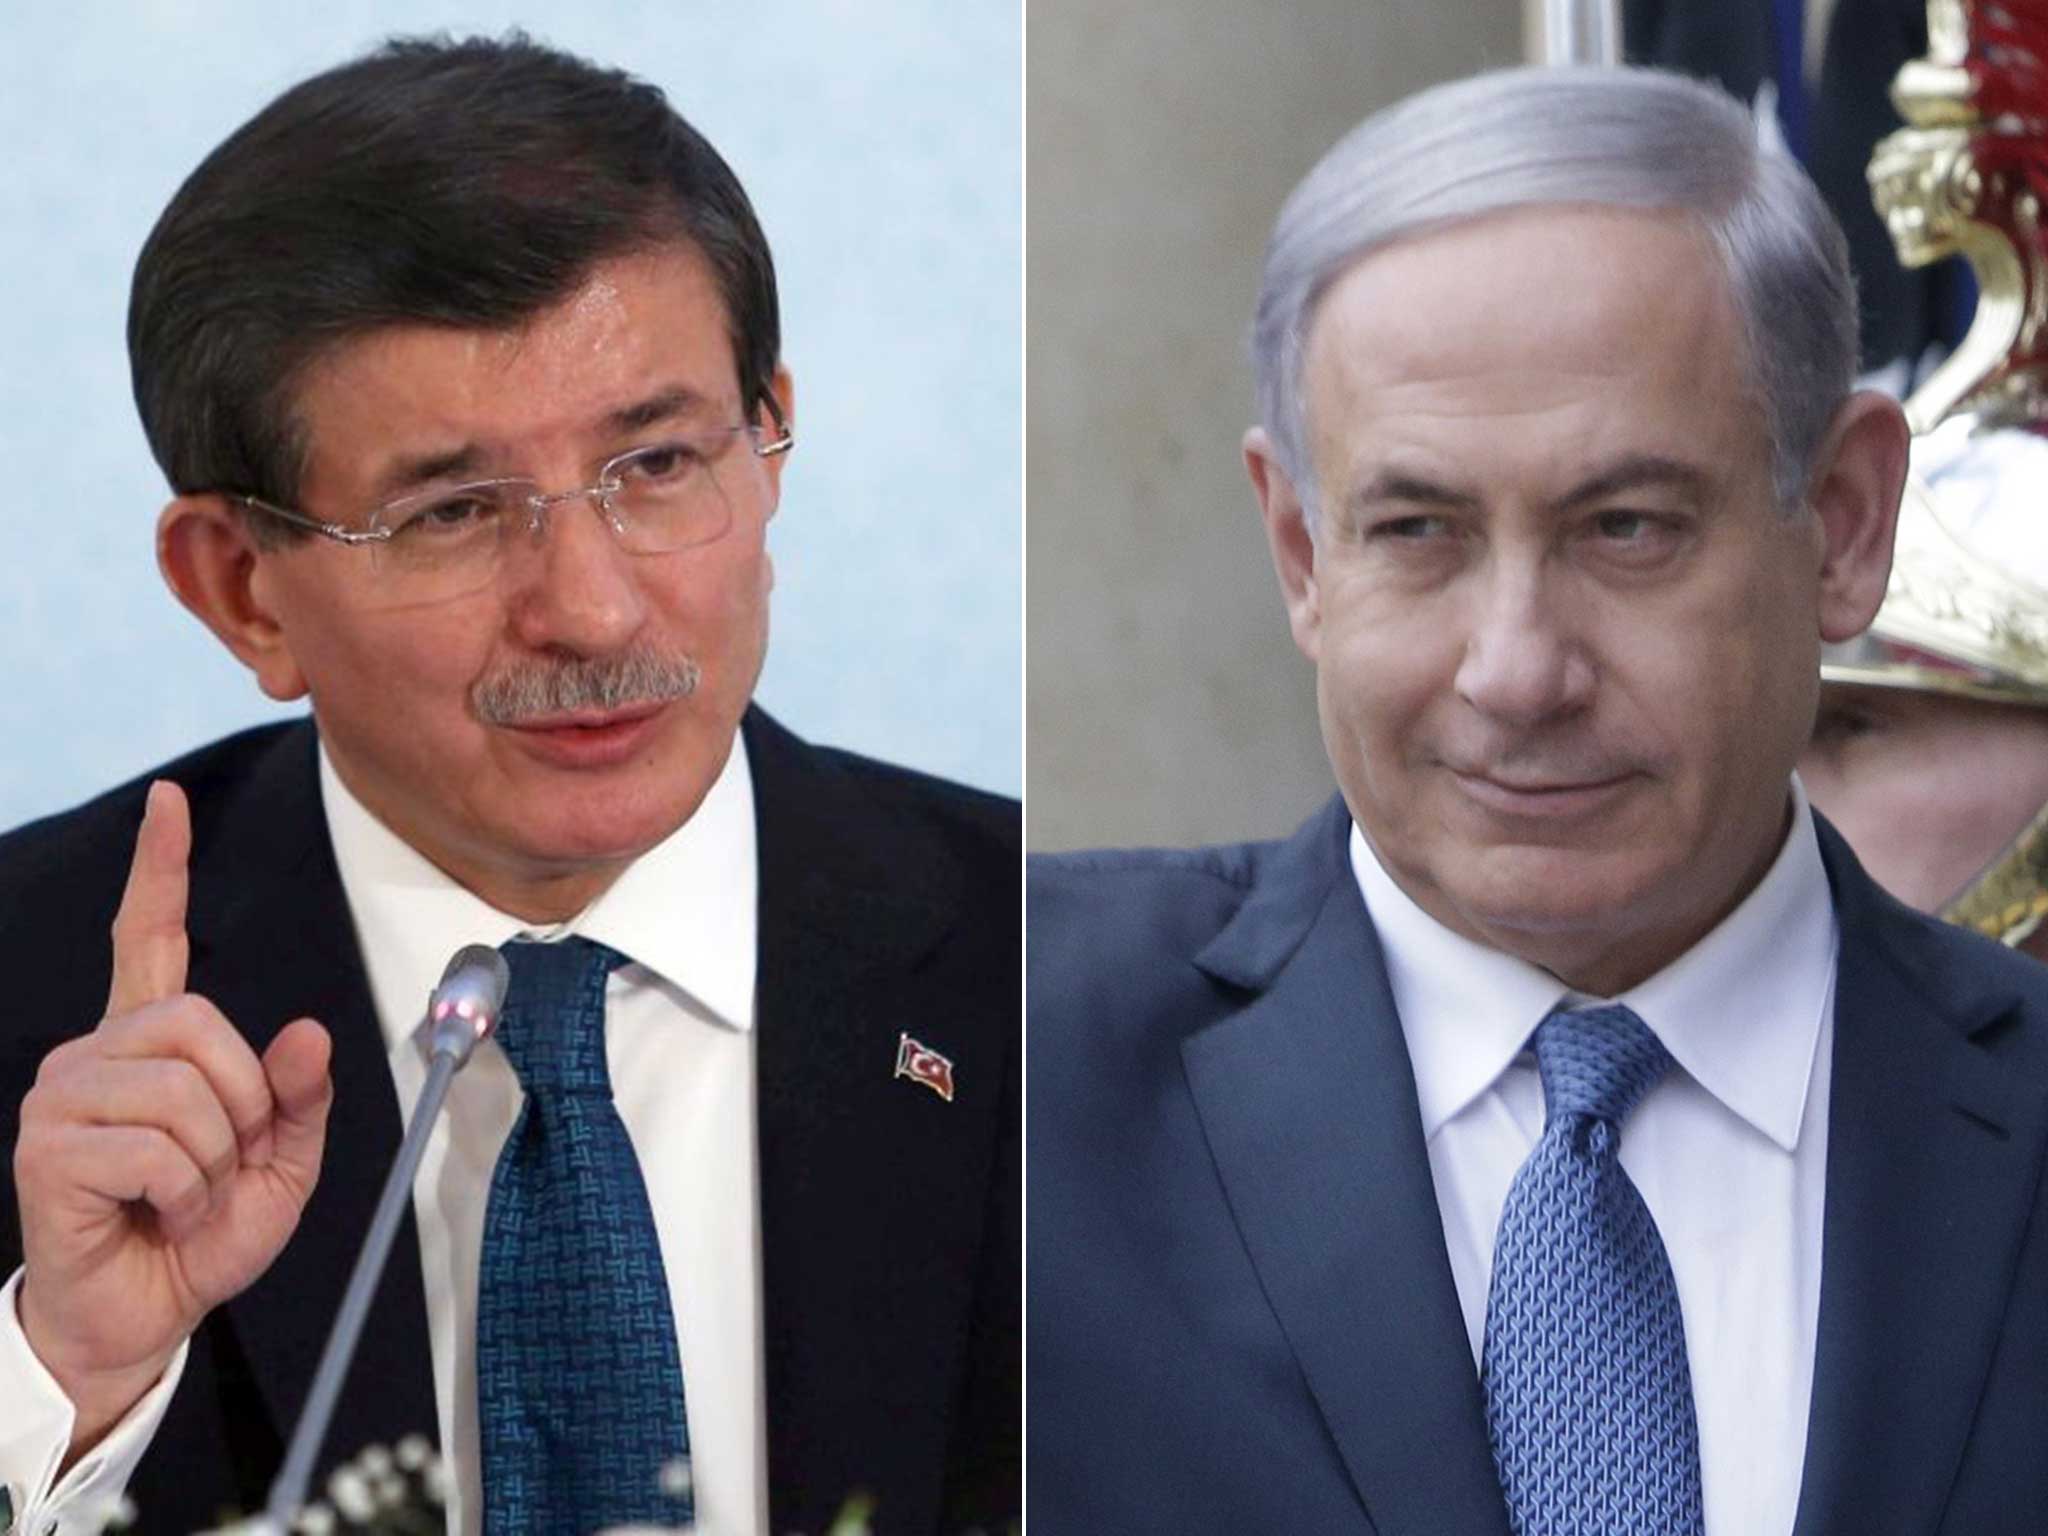 Turkish Prime Minister Ahmet Davutoglu and Israeli counterpart Benjamin Netanyahu